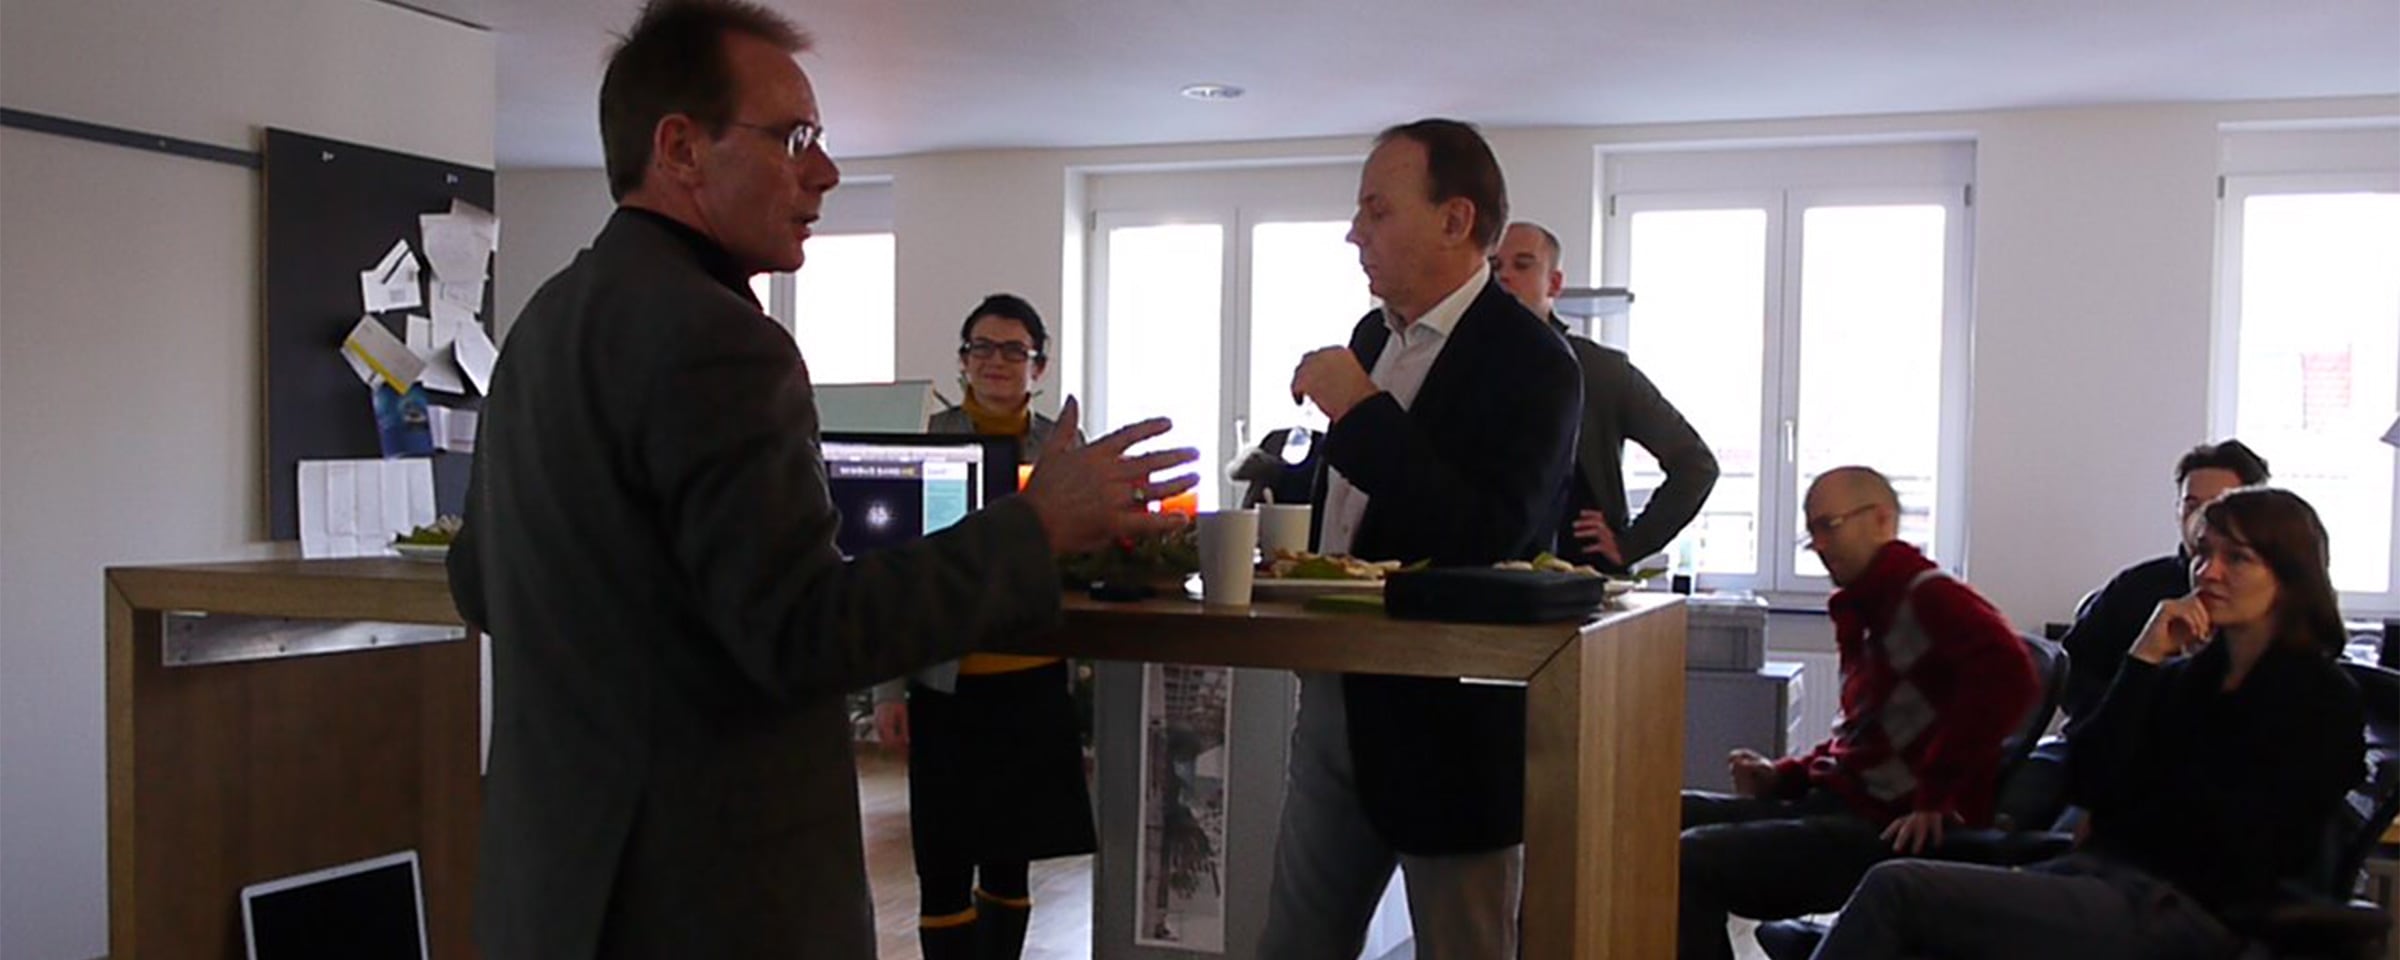 Peter Rosenfeld and Dr. Jürgen Willrodt speak at Intuity office